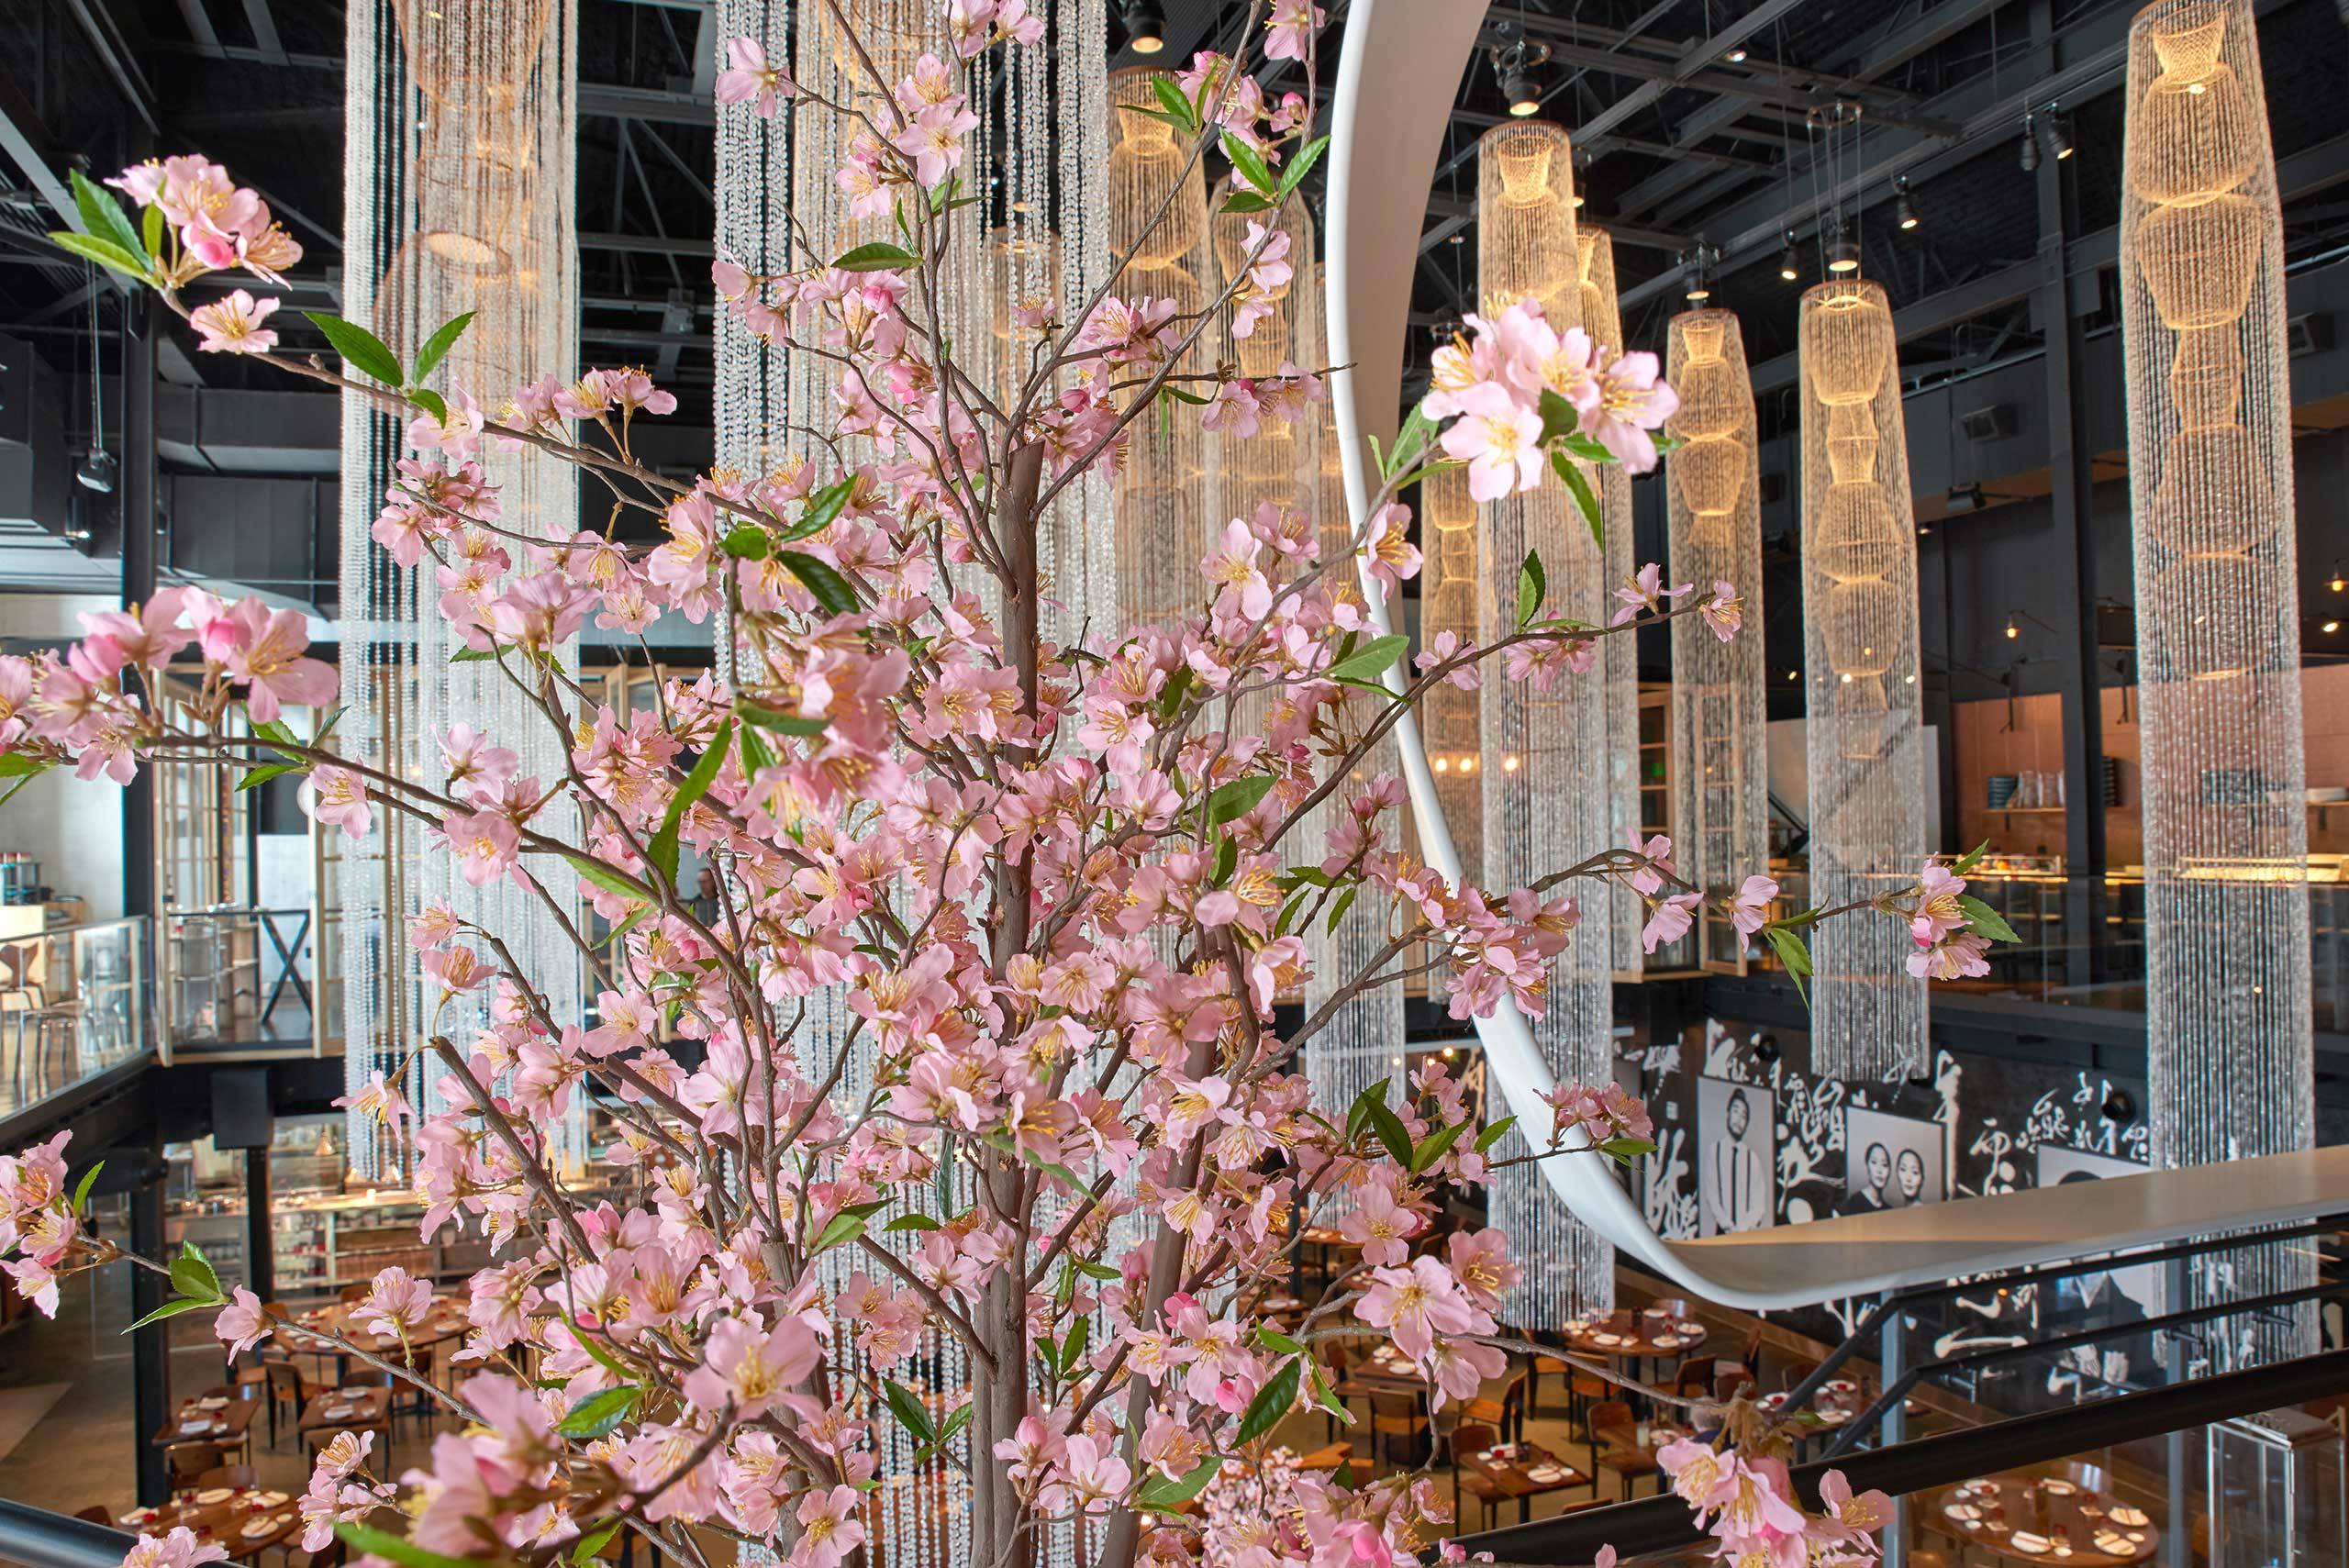 Month-long Sakura Festival begins tonight at Morimoto Asia in Disney Springs